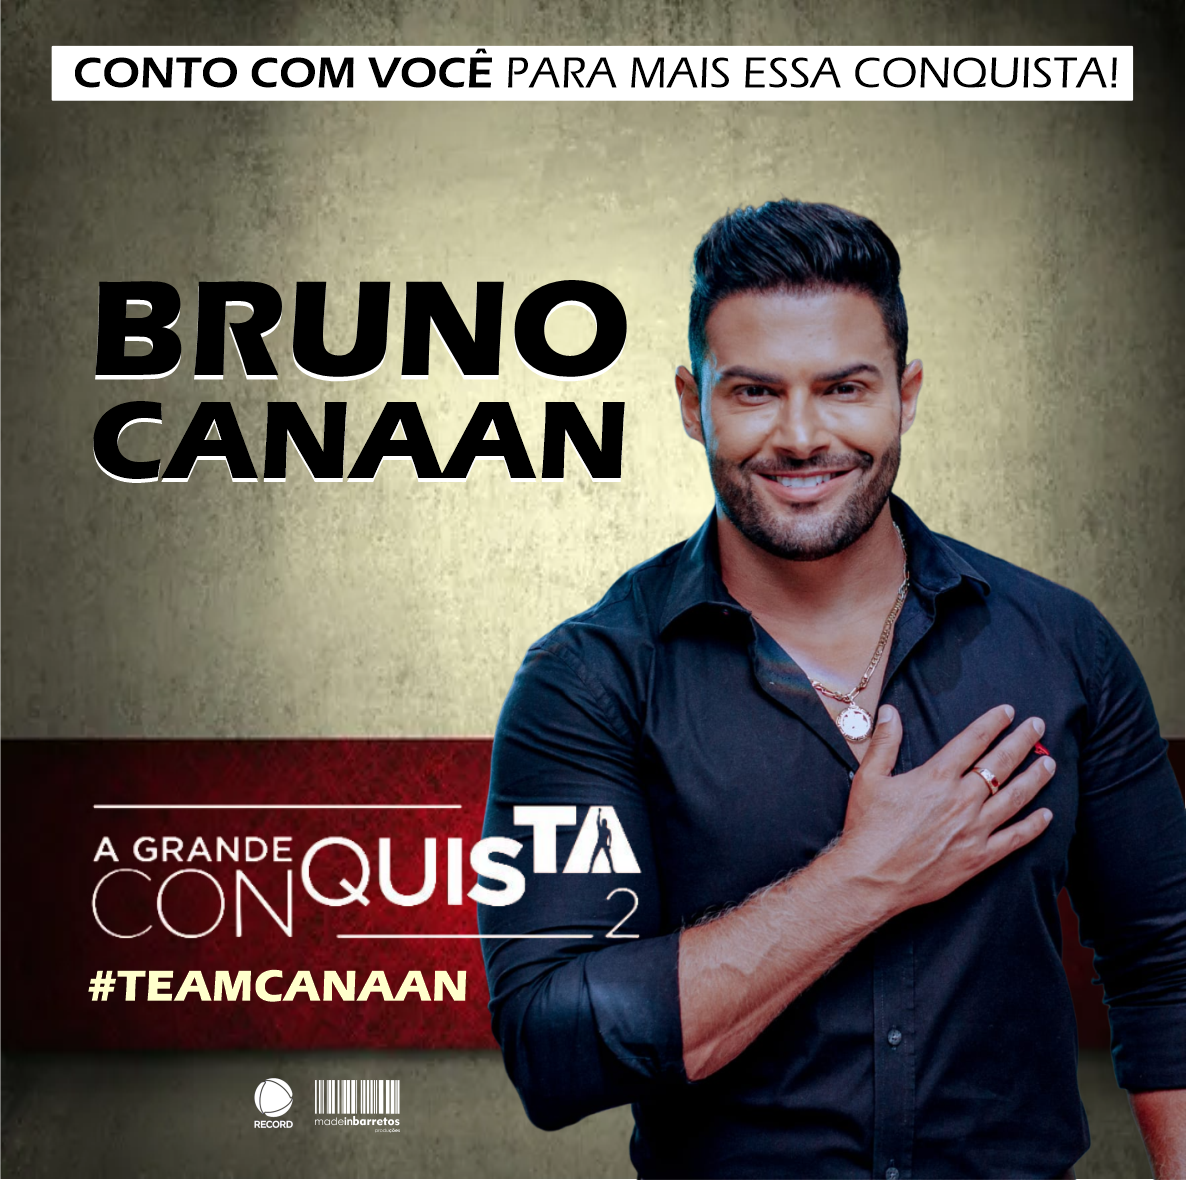 Modelo e ator mineiro Bruno Canaan é um dos participantes de "A Grande Conquista 2" da Record